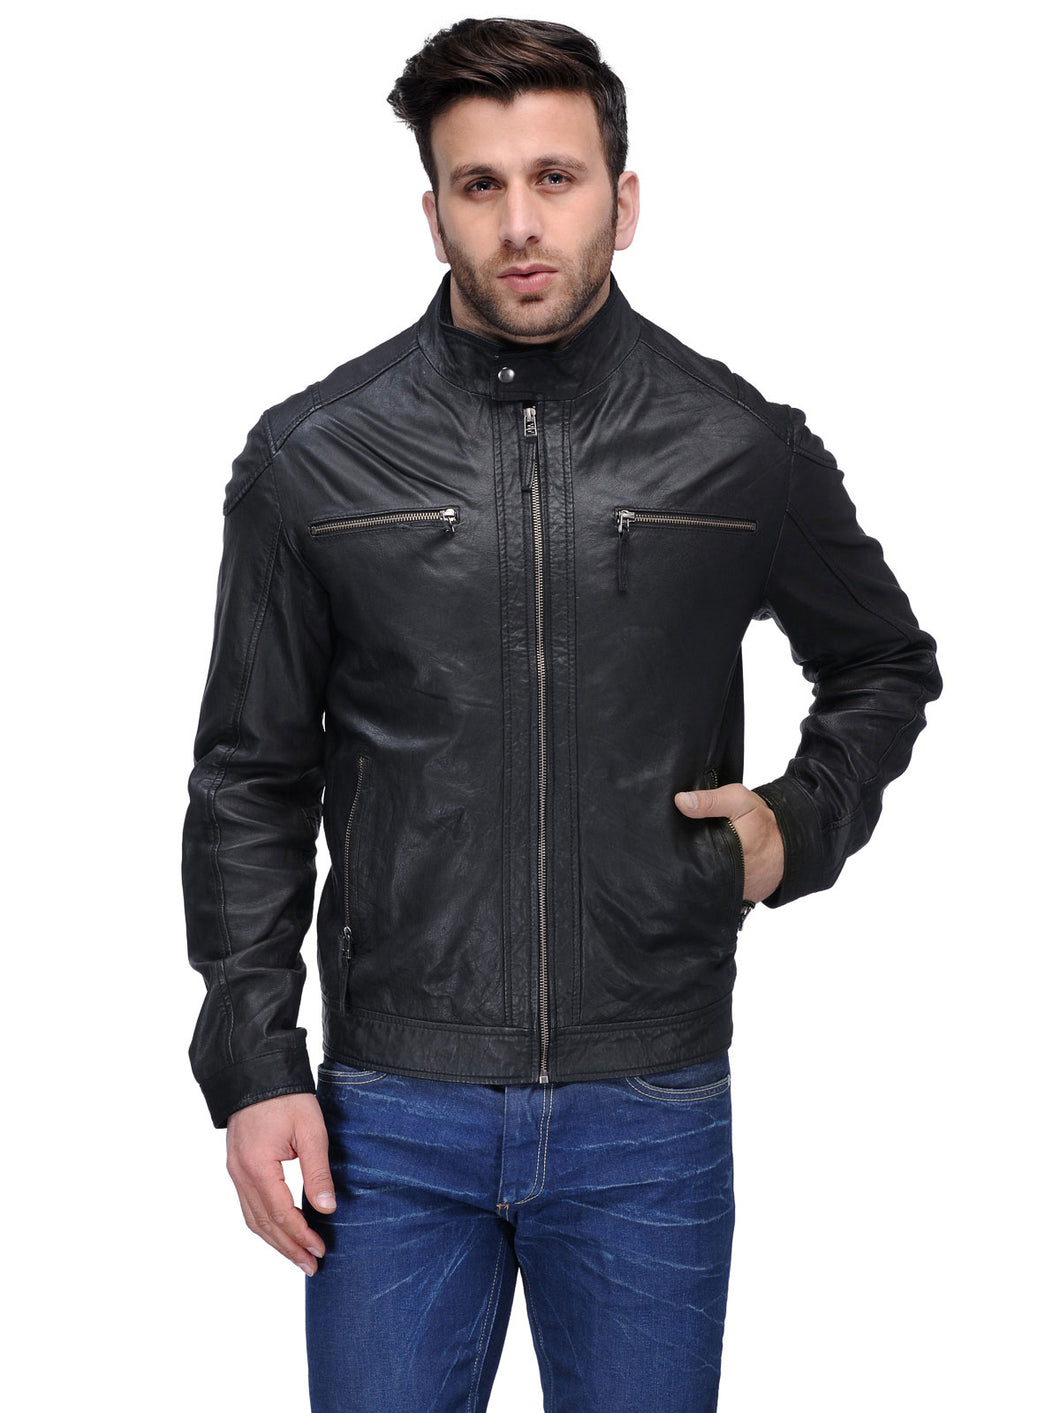 Teakwood Genuine Leather Black Jacket for Mens